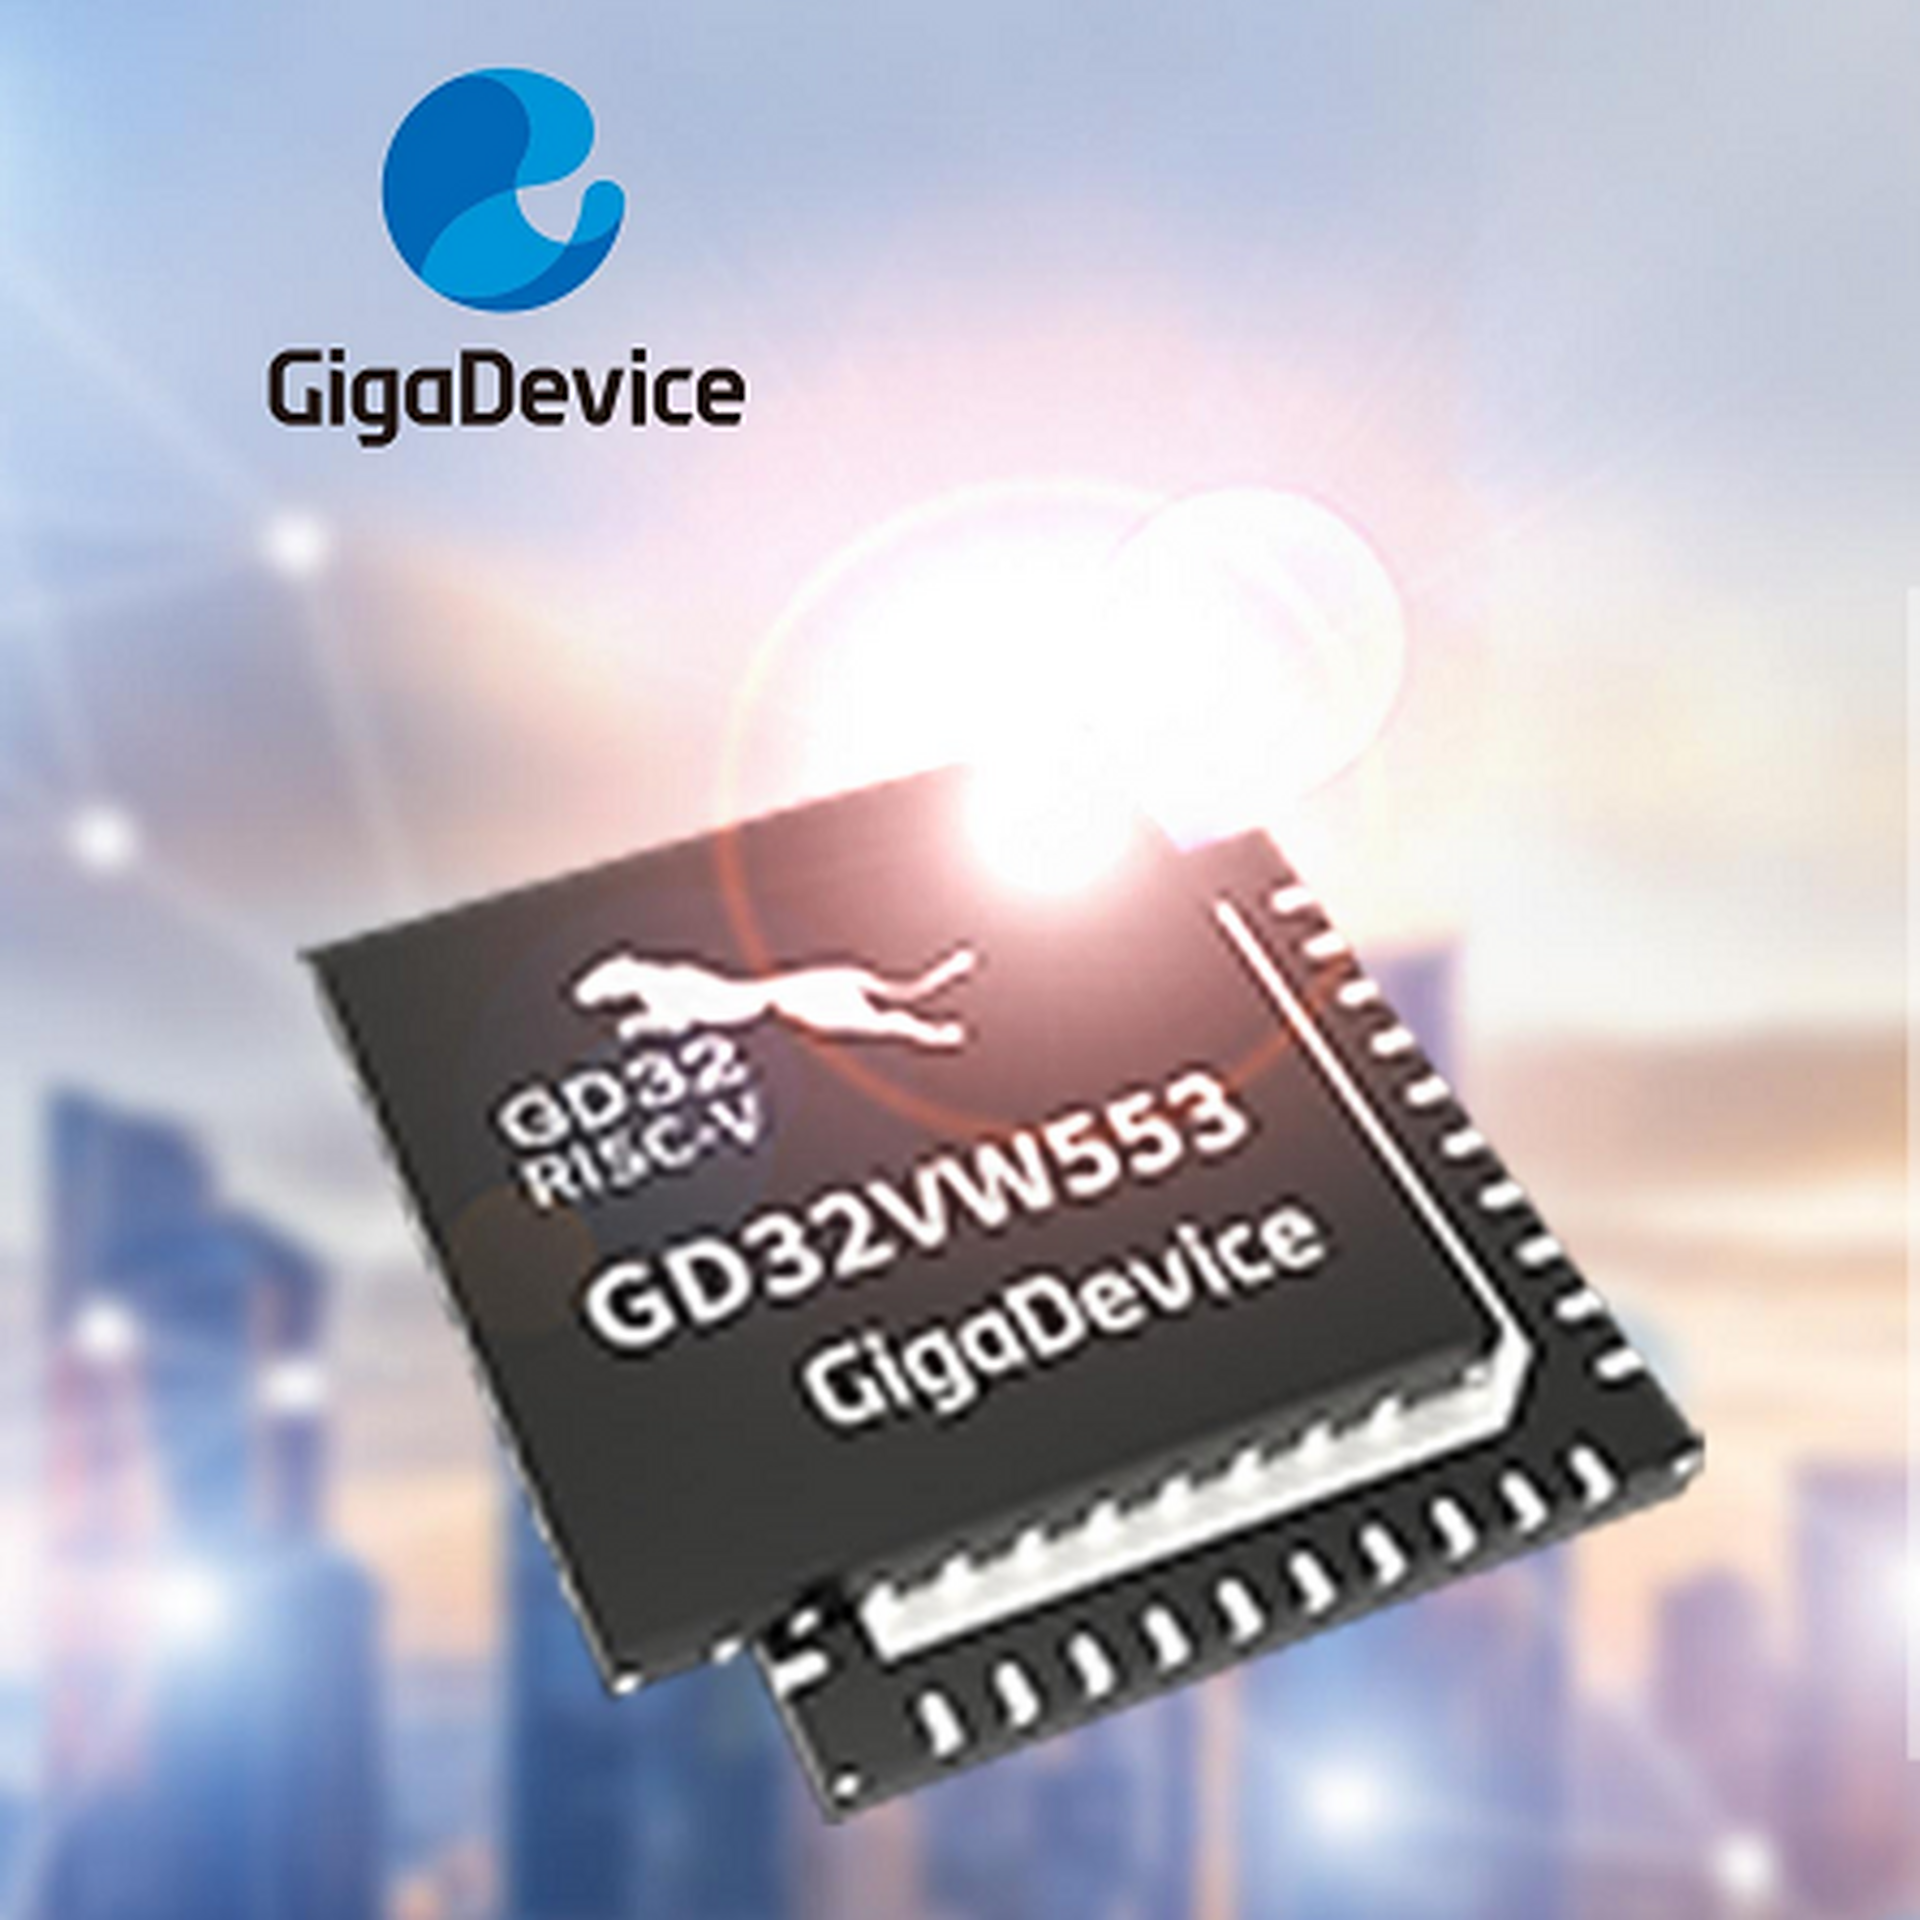 Giga Device GD32 VW553